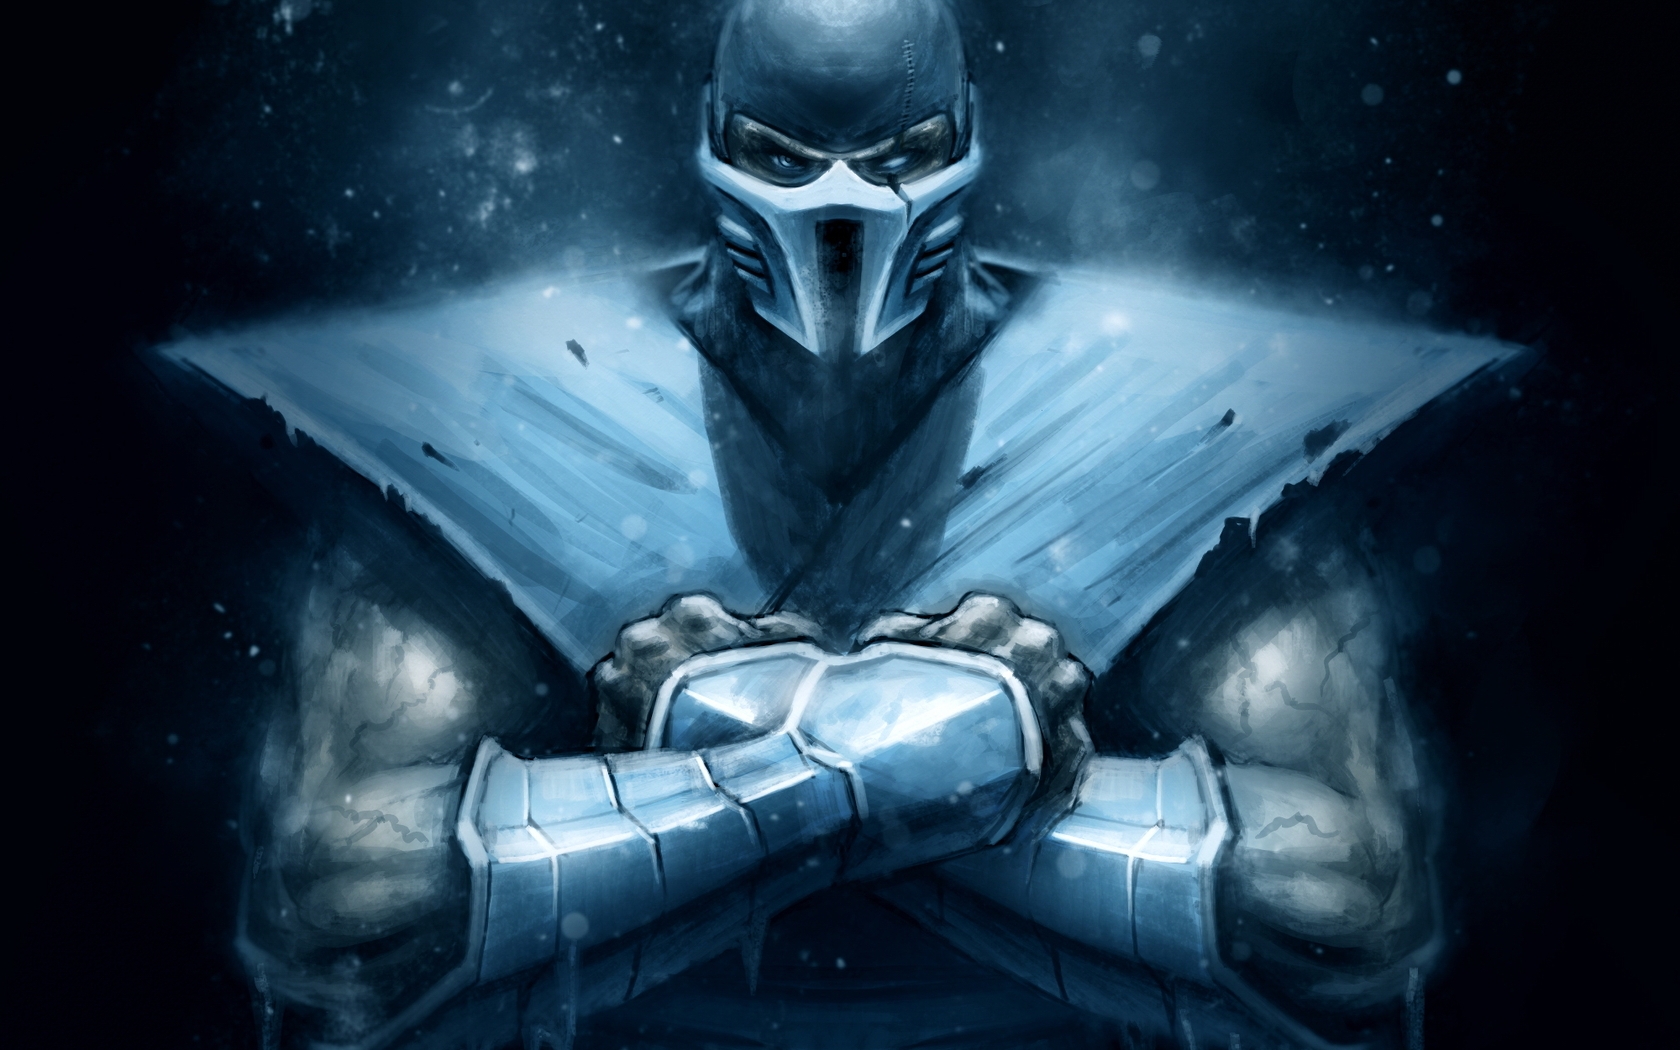 Image: Sub-Zero, fighter, Mortal Kombat, art